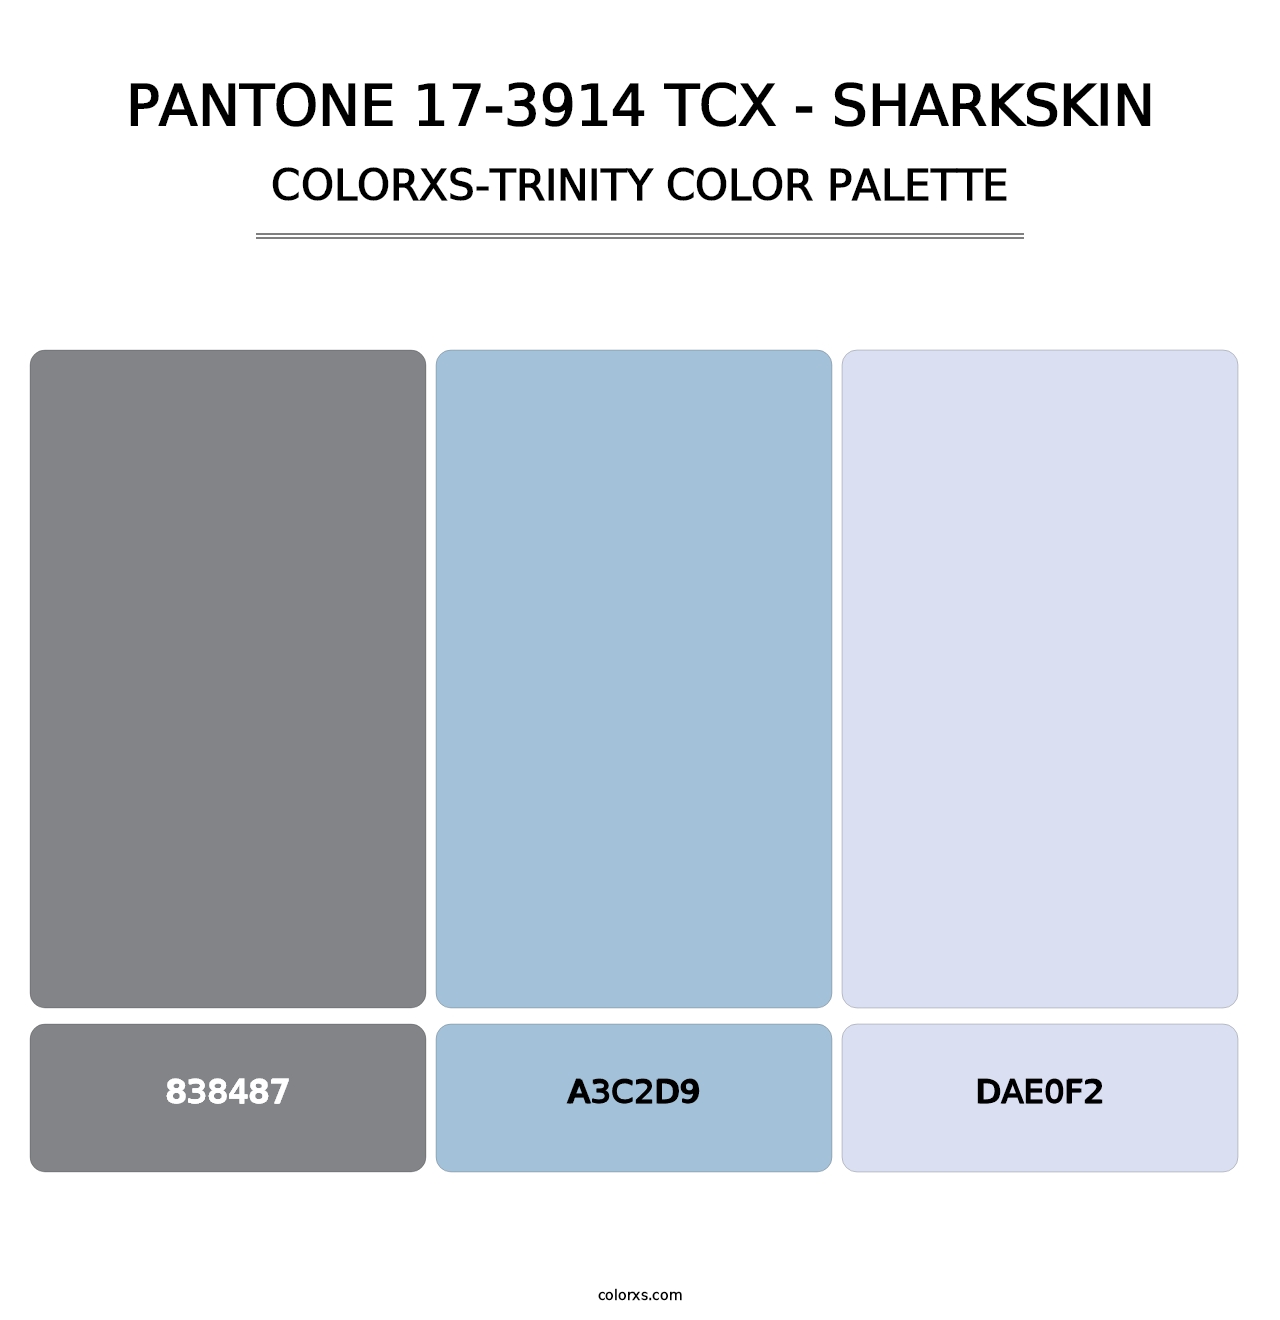 PANTONE 17-3914 TCX - Sharkskin - Colorxs Trinity Palette